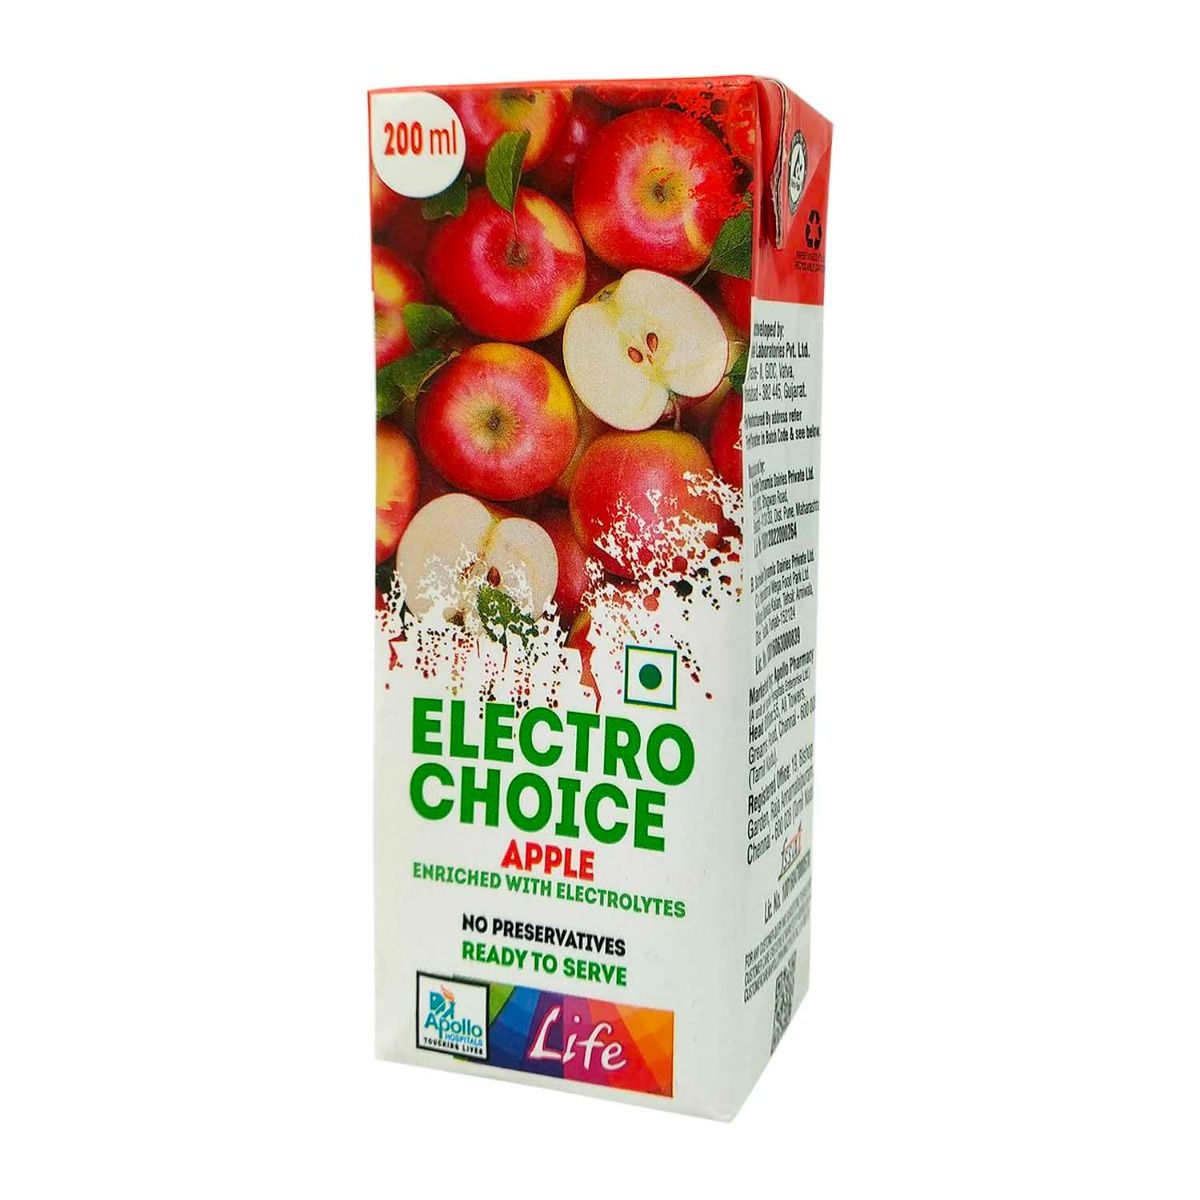 Apollo Life Electro Choice Apple Flavour Liquid 800 ml, (4x200 ml), Pack of 4 S